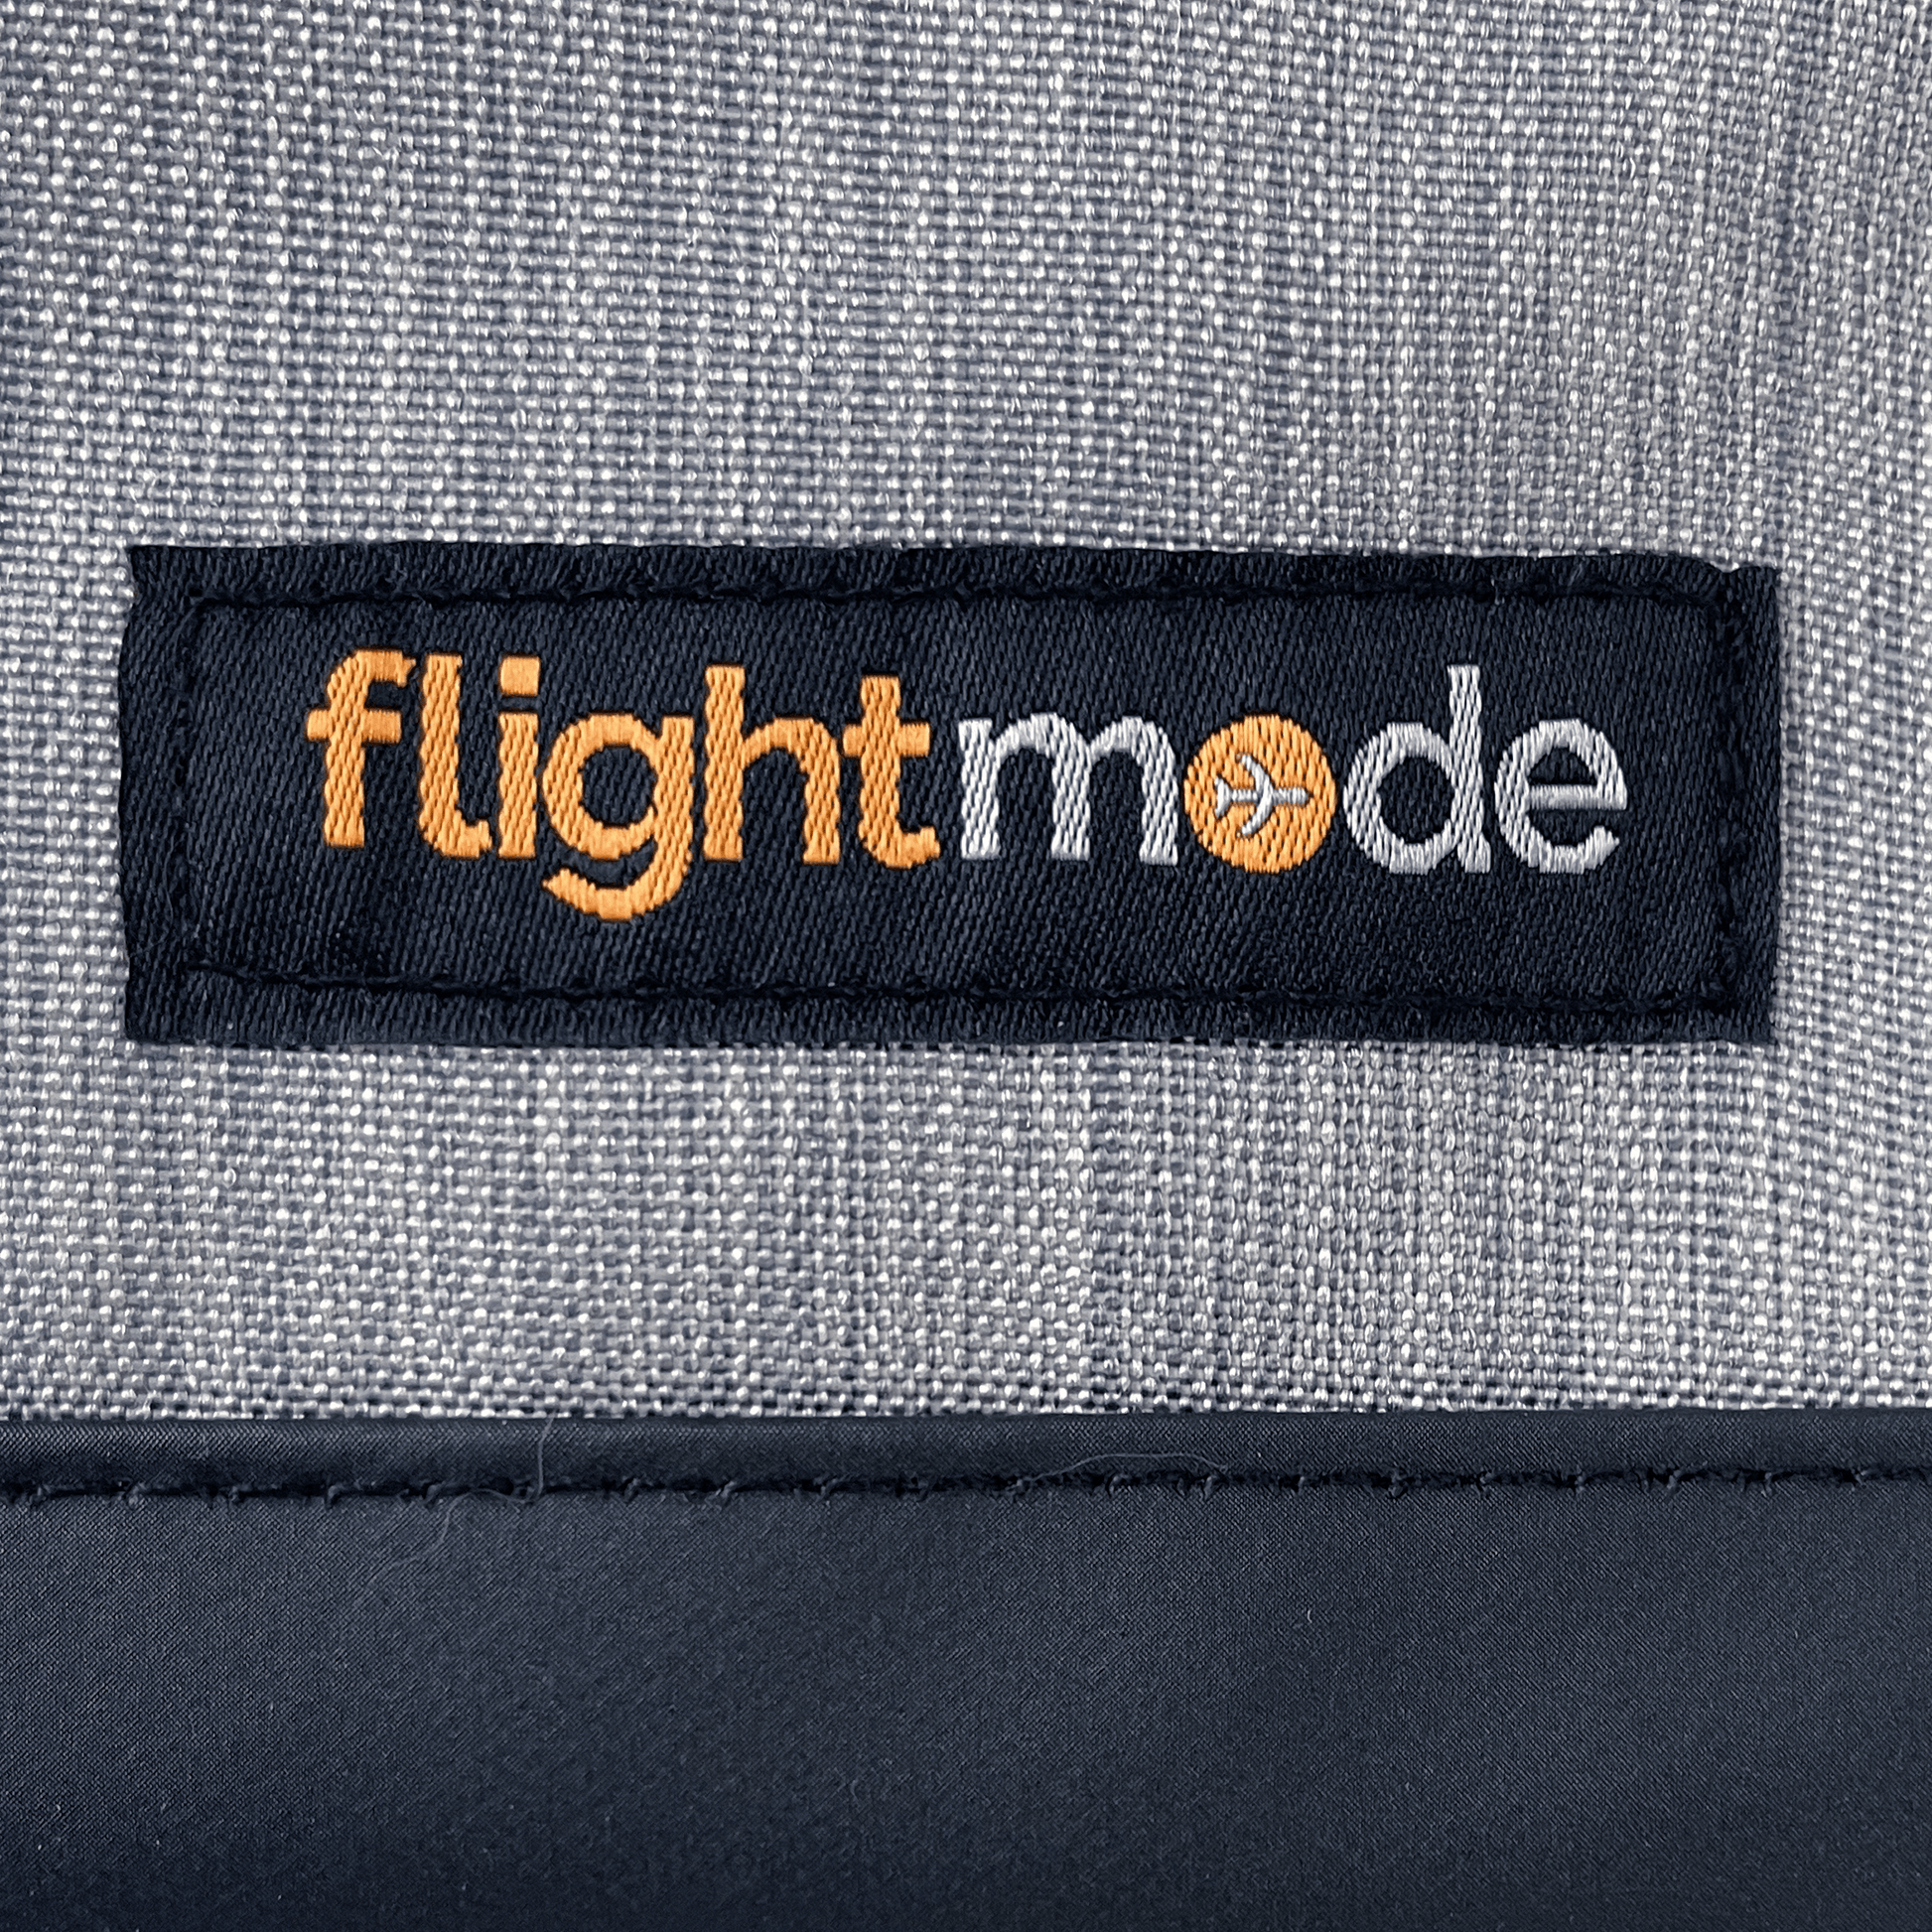 Flightmode Bags and Luggage Flightmode Duffel Bag - Gray